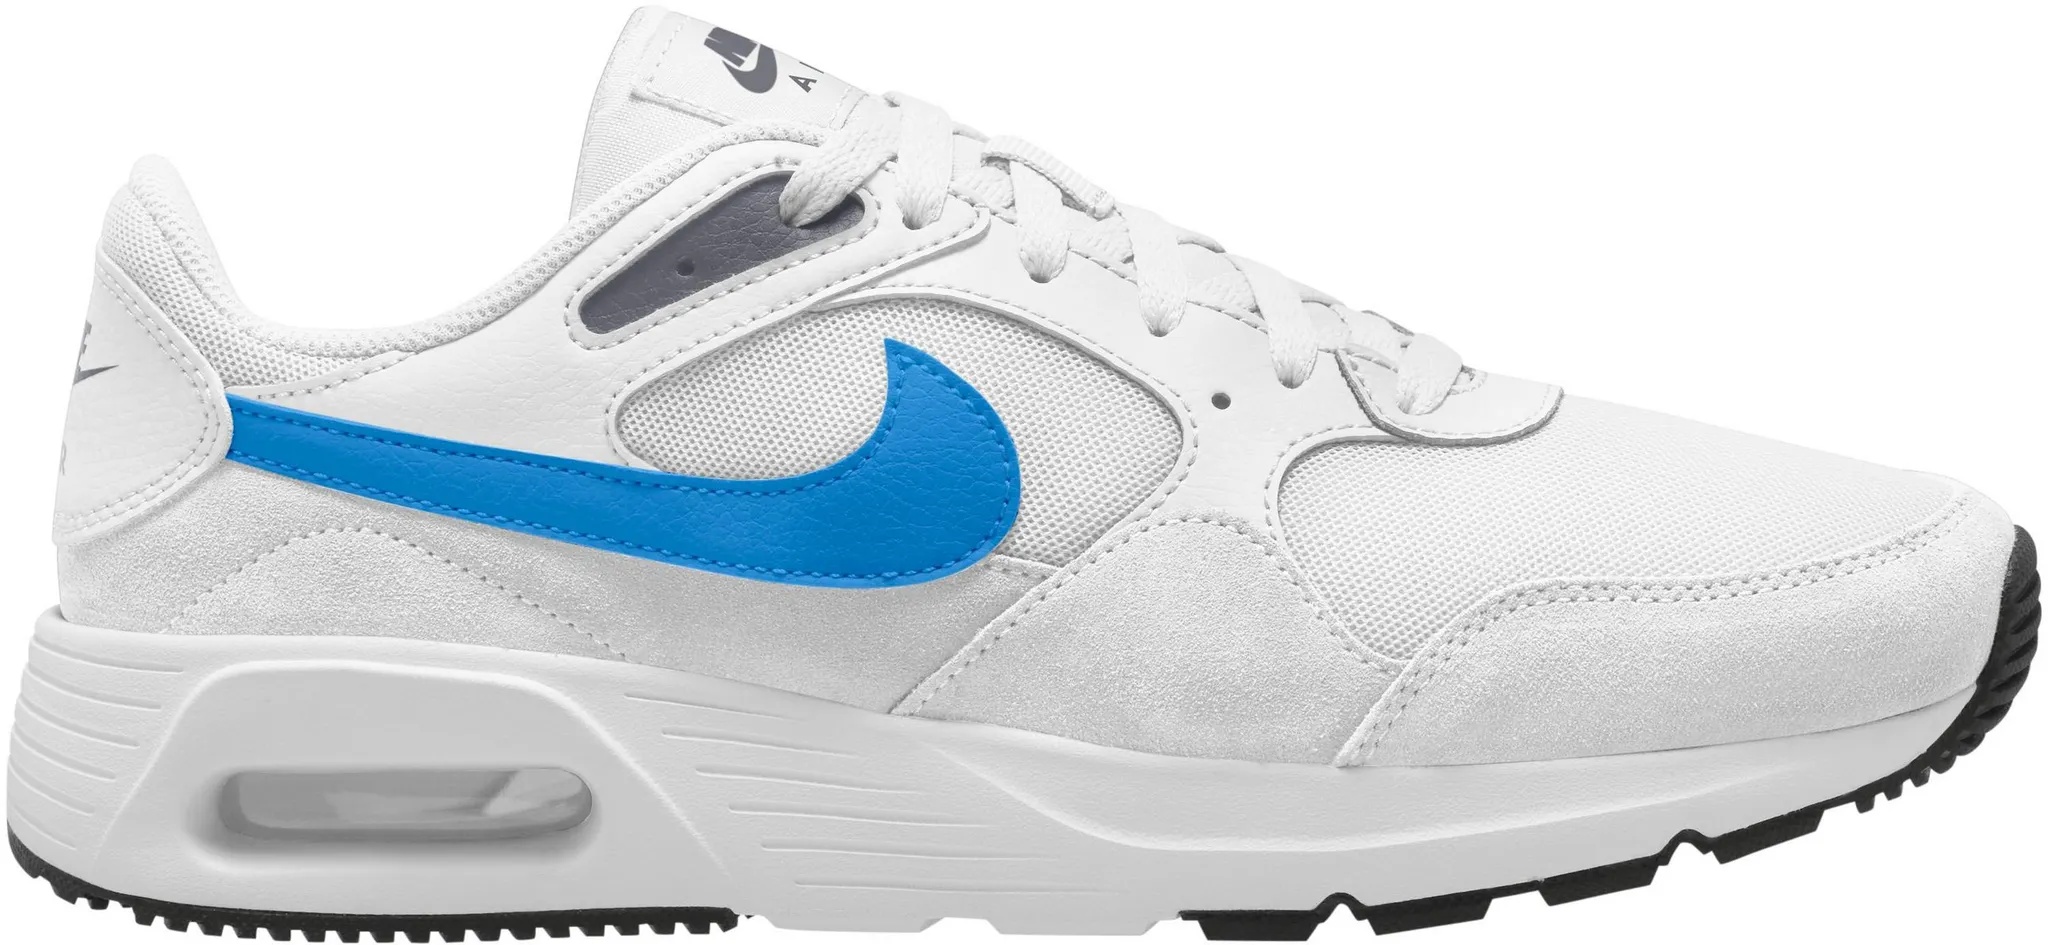 Nike Air Max SC Sneaker Herren in white-light photo blue-thunder blue-white, Größe 44 1/2 - weiß